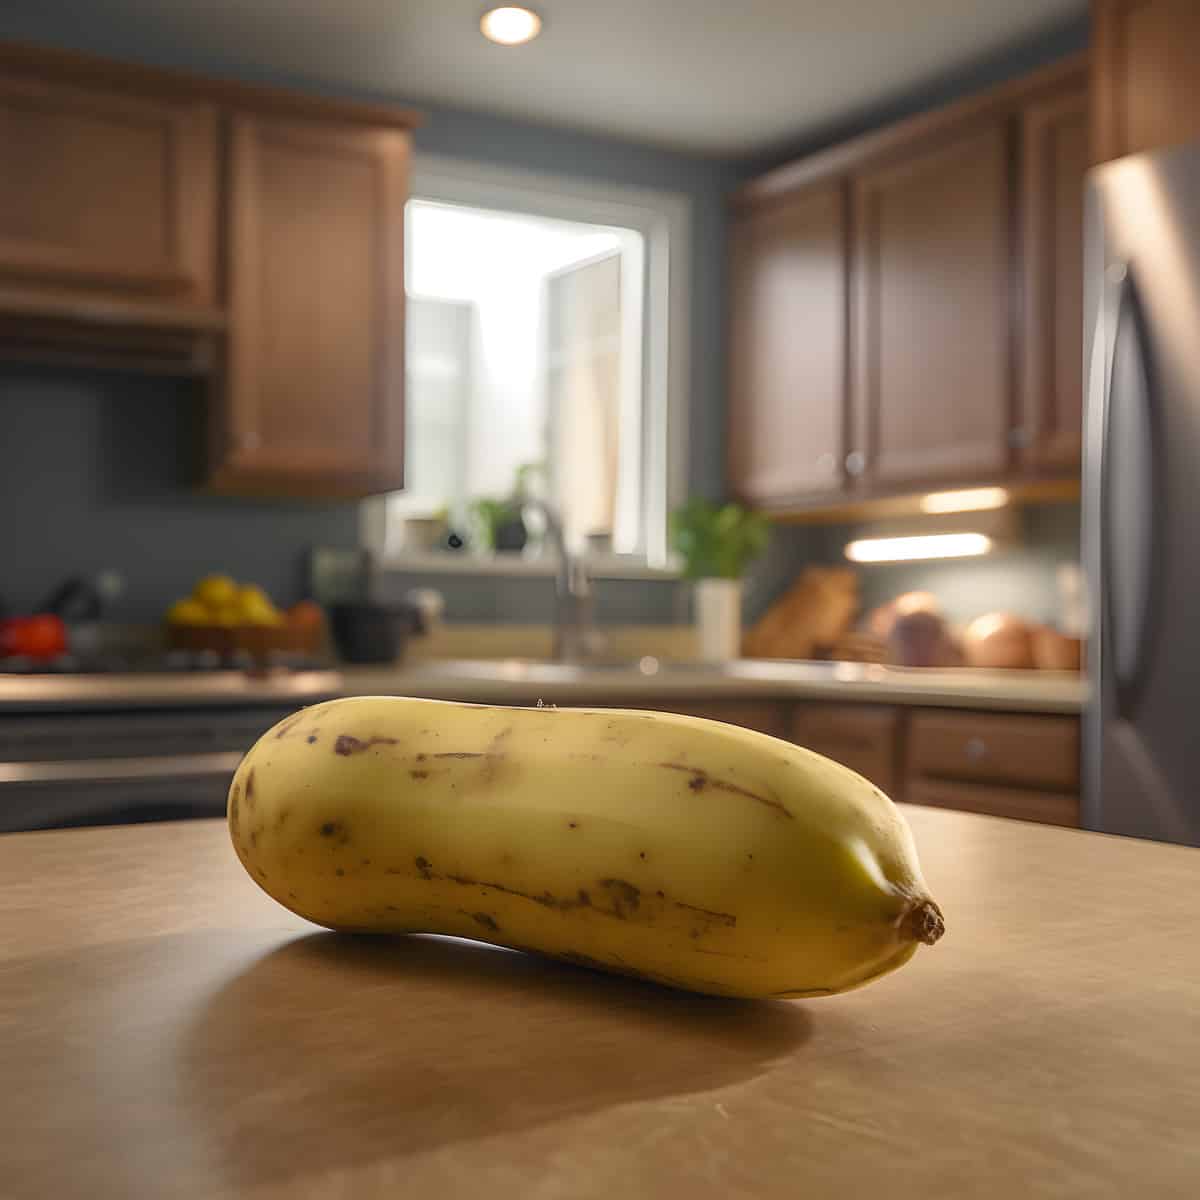 Banana Potatoes on a kitchen counter